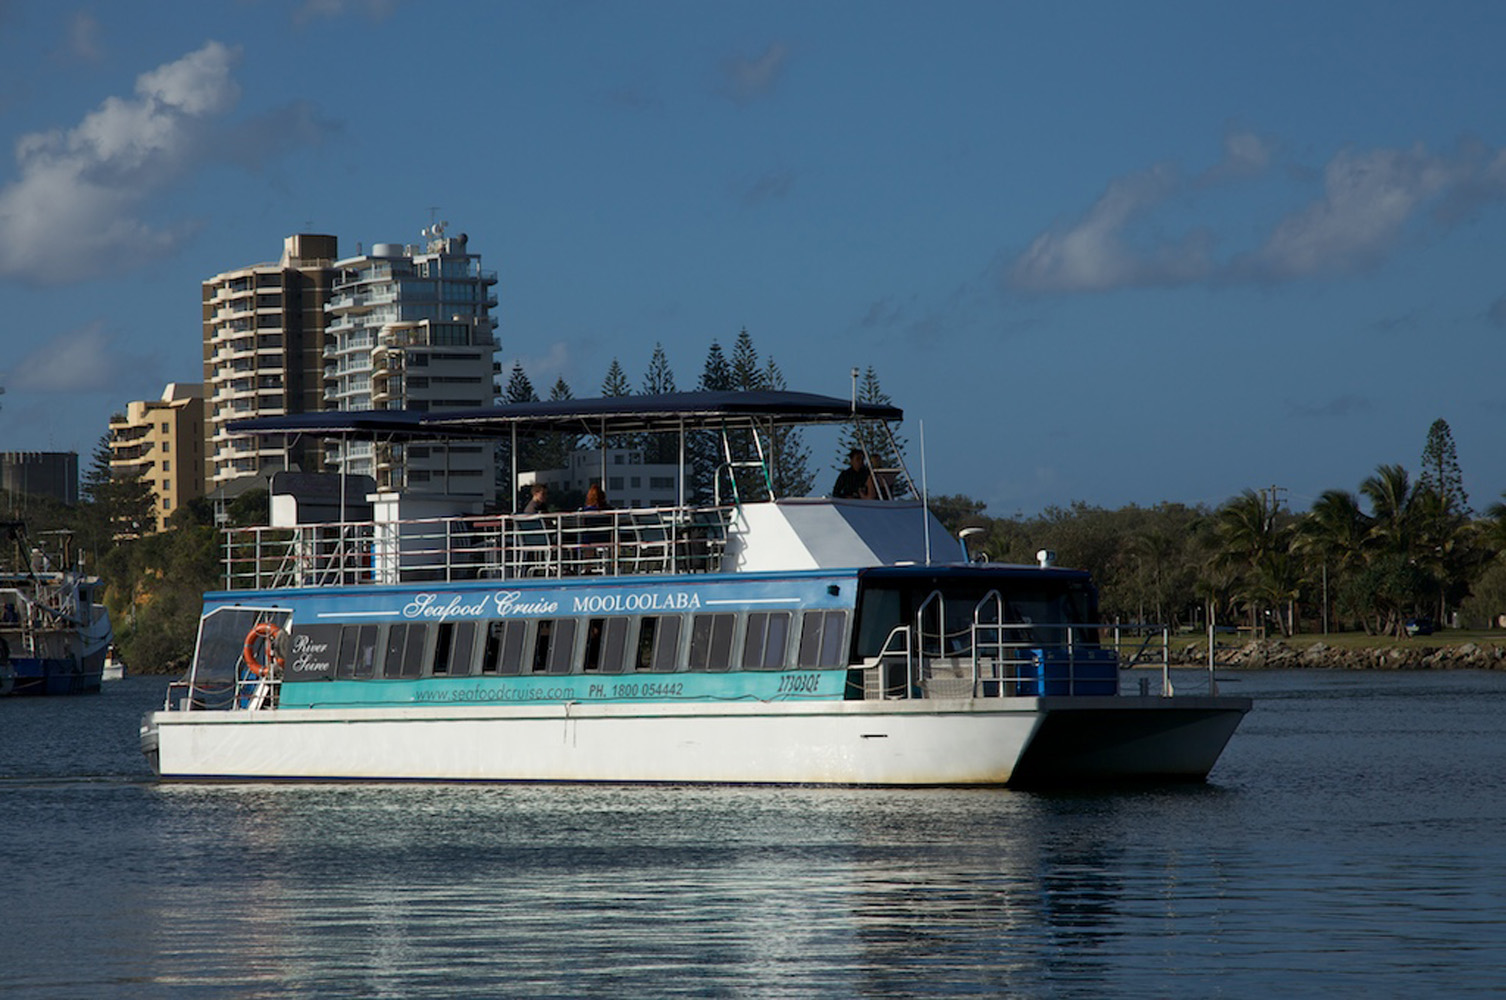 The Seafood Cruise boat, Mooloolaba, used for a scene in Just Like U.